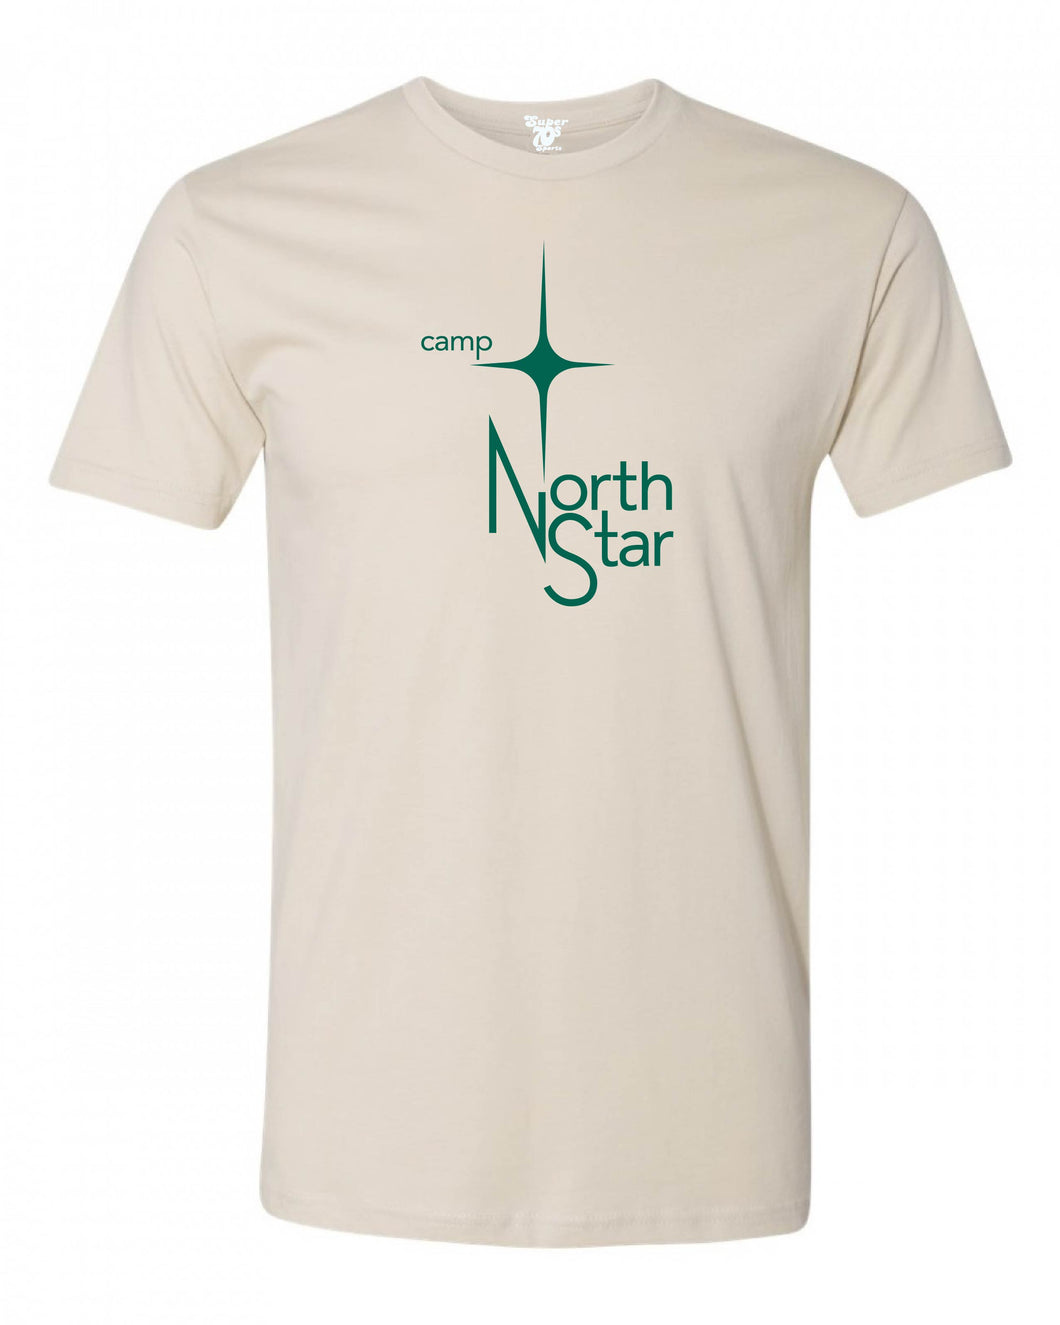 camp north star t shirt